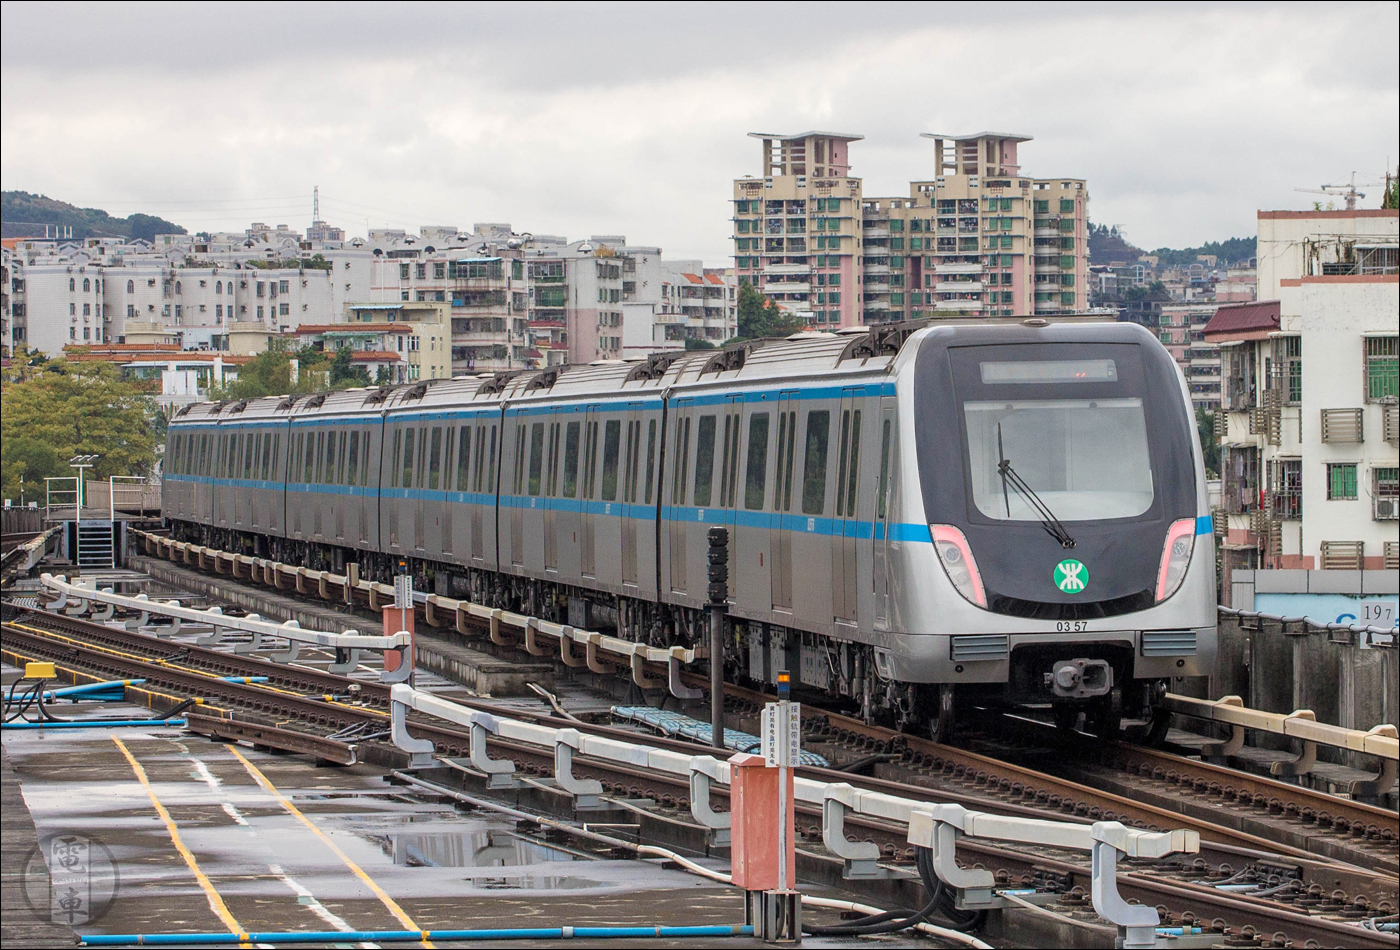 Shenzhen Metro „Puzhen B” sorozatú motorvonat indul Caopu (草埔, cǎobù) megállóból Shuanglong (双龙, shuānglóng) felé.